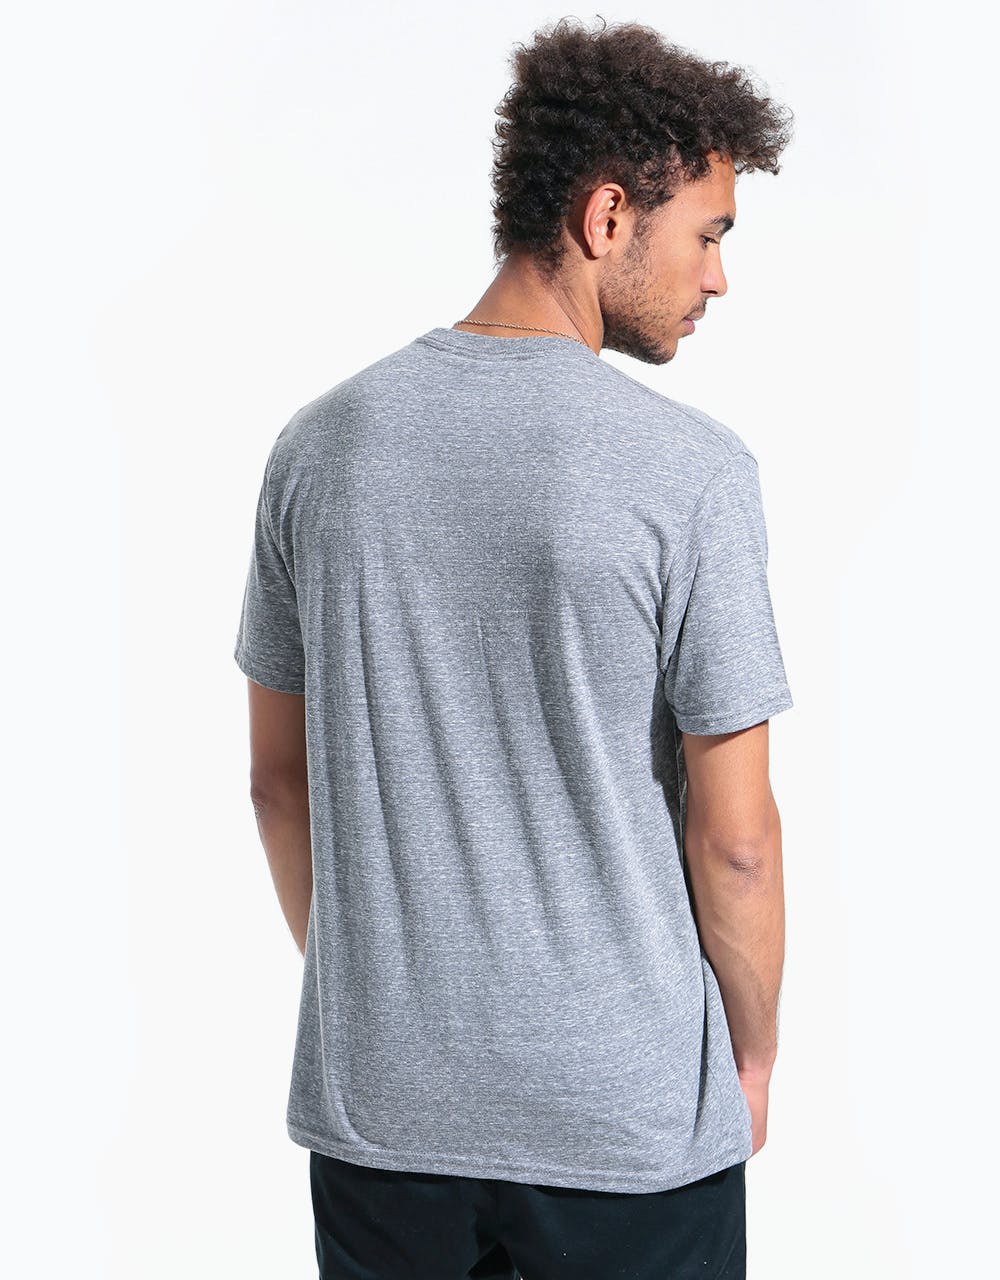 RIPNDIP Lord Nermal Pocket T-Shirt - Athletic Grey